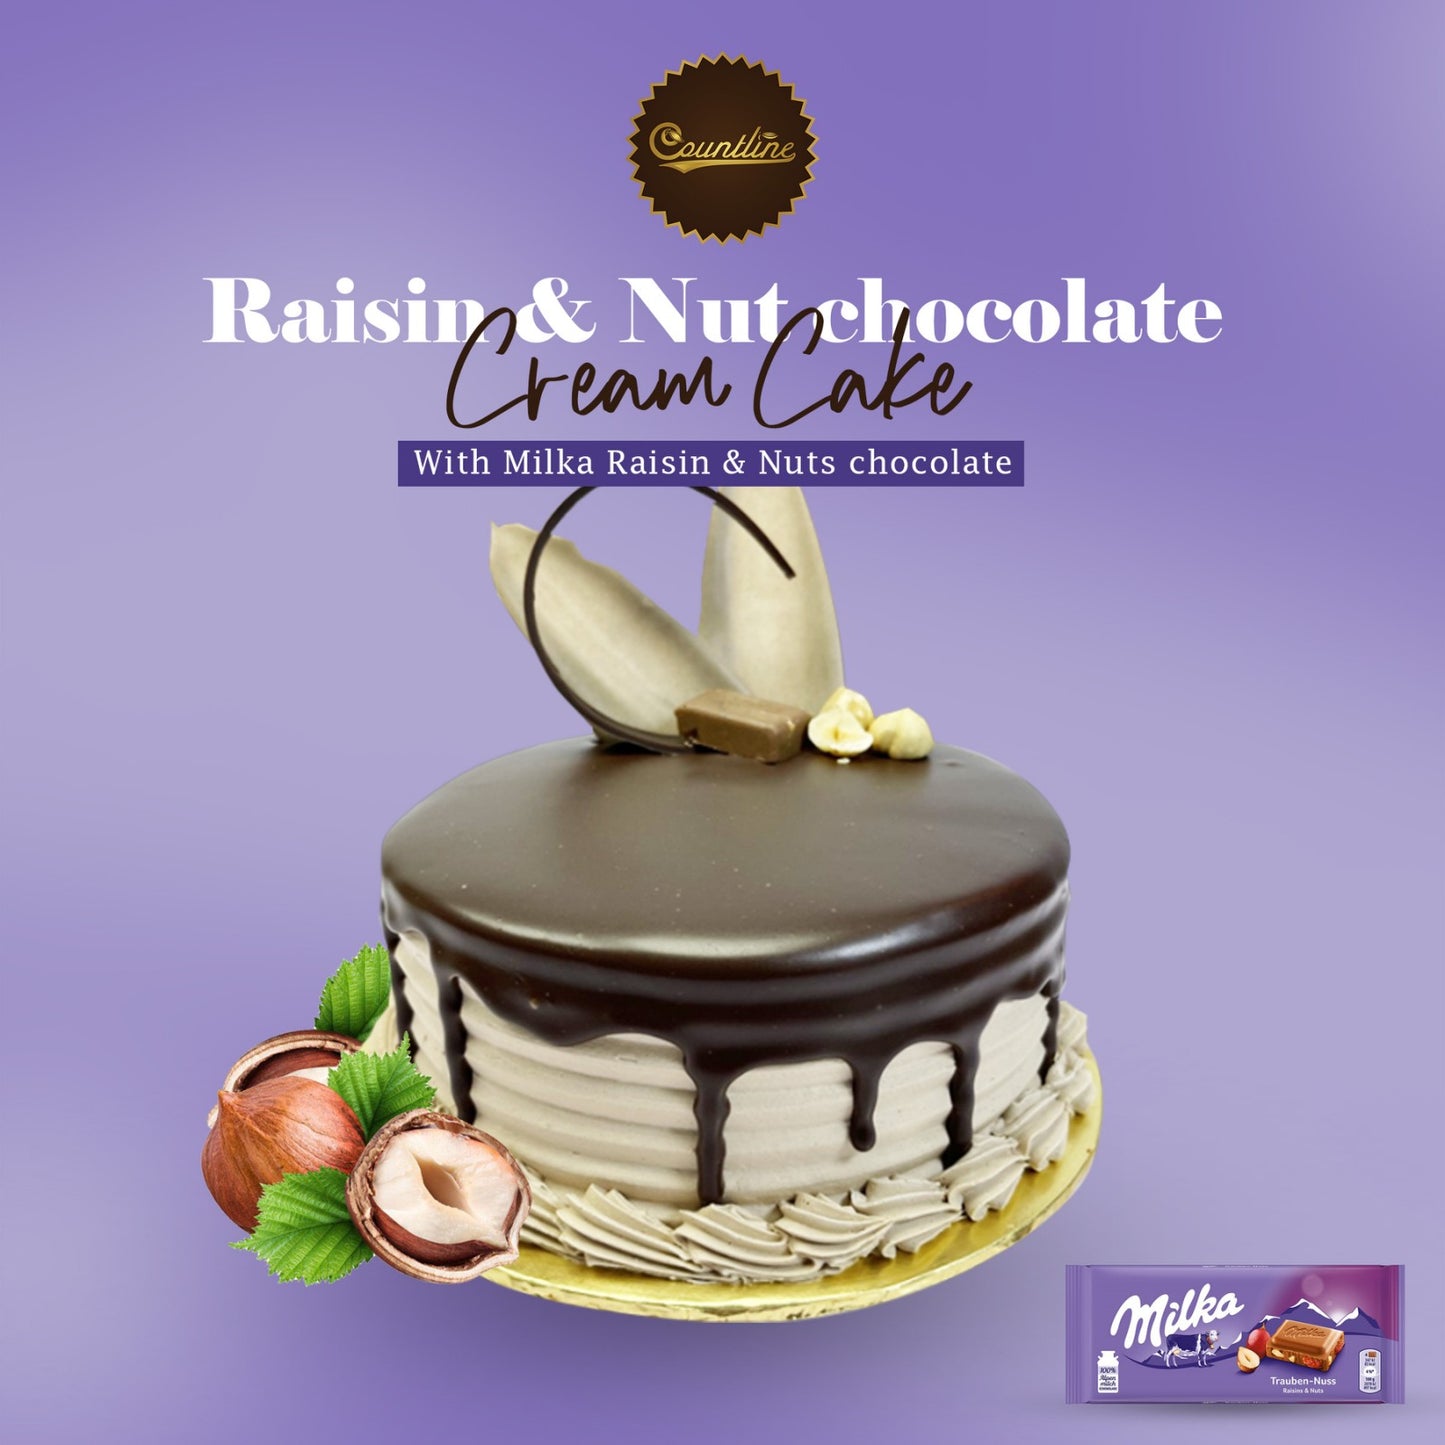 Raisin & Nut Chocolate Cream Cake